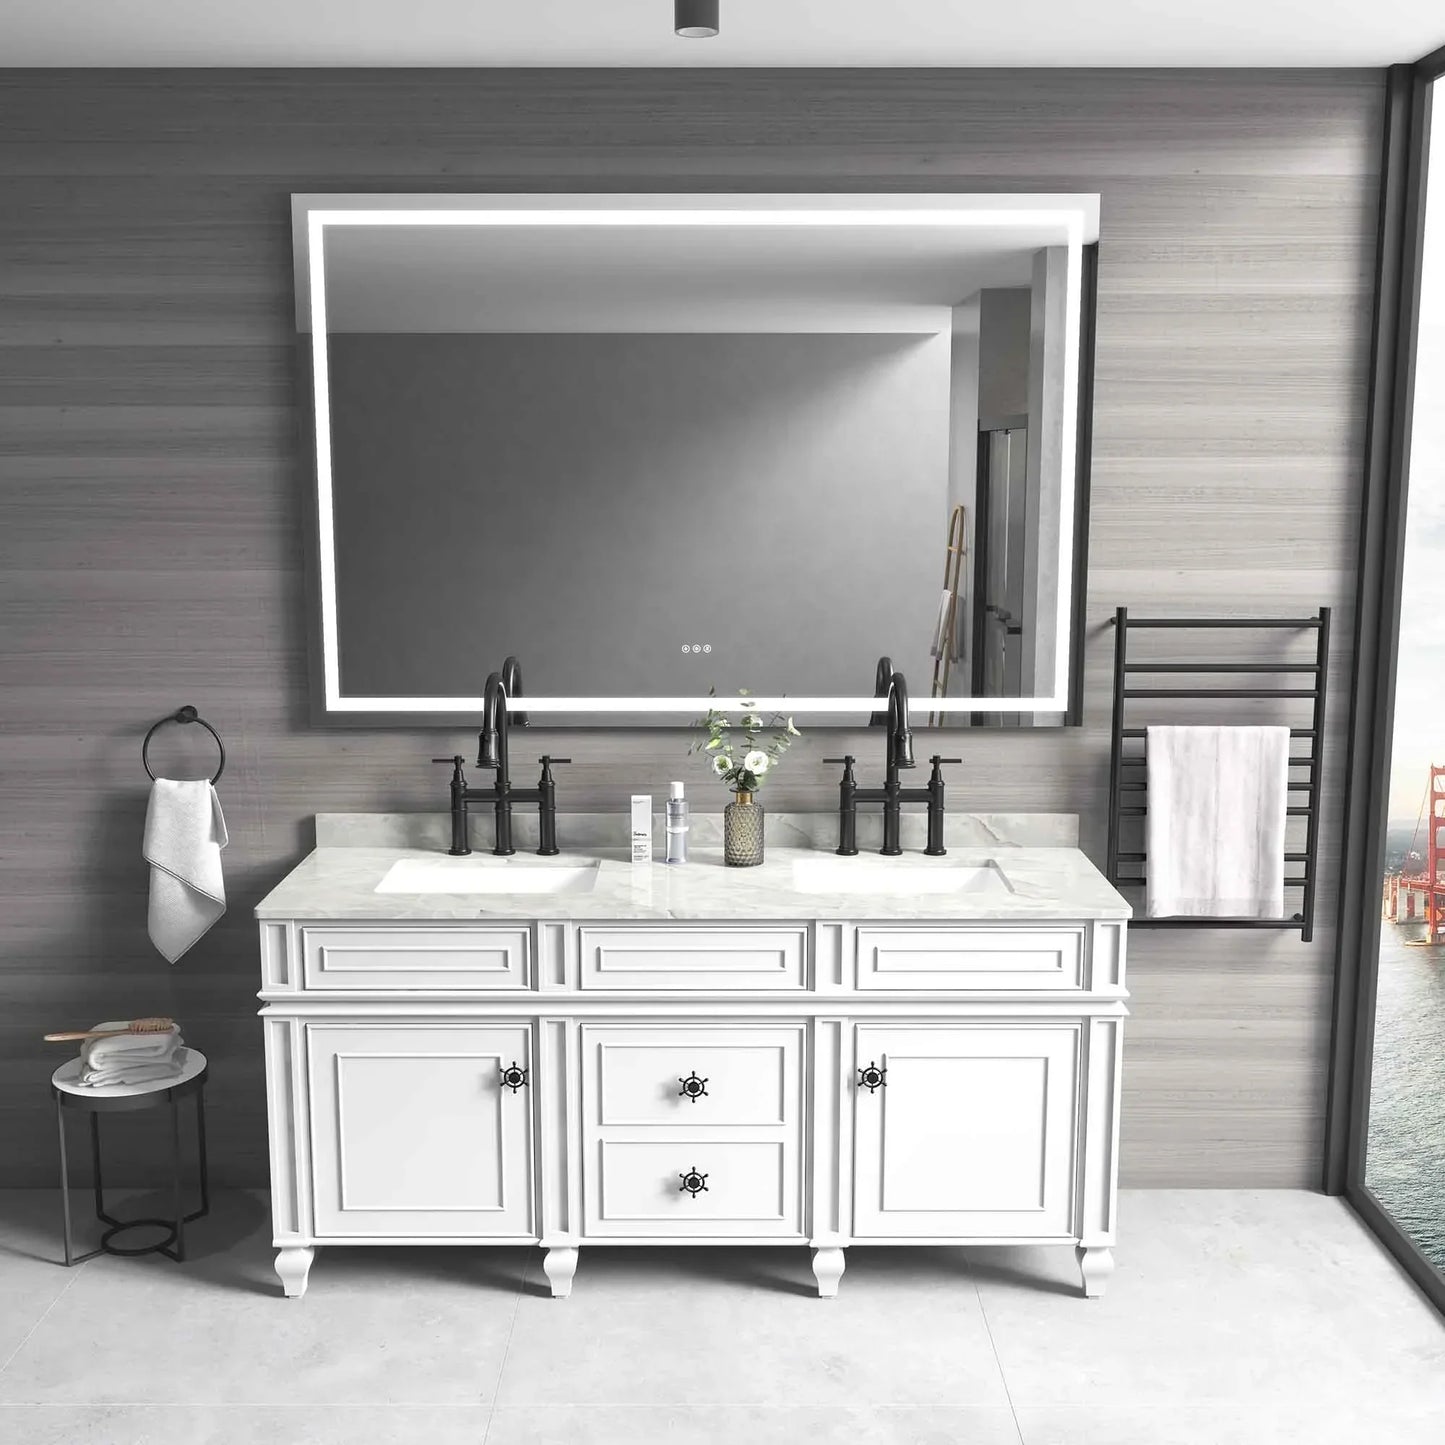 72'' W x 48'' H Large LED Bedroom Mirror, Frameless, Anti-mist, Front Light